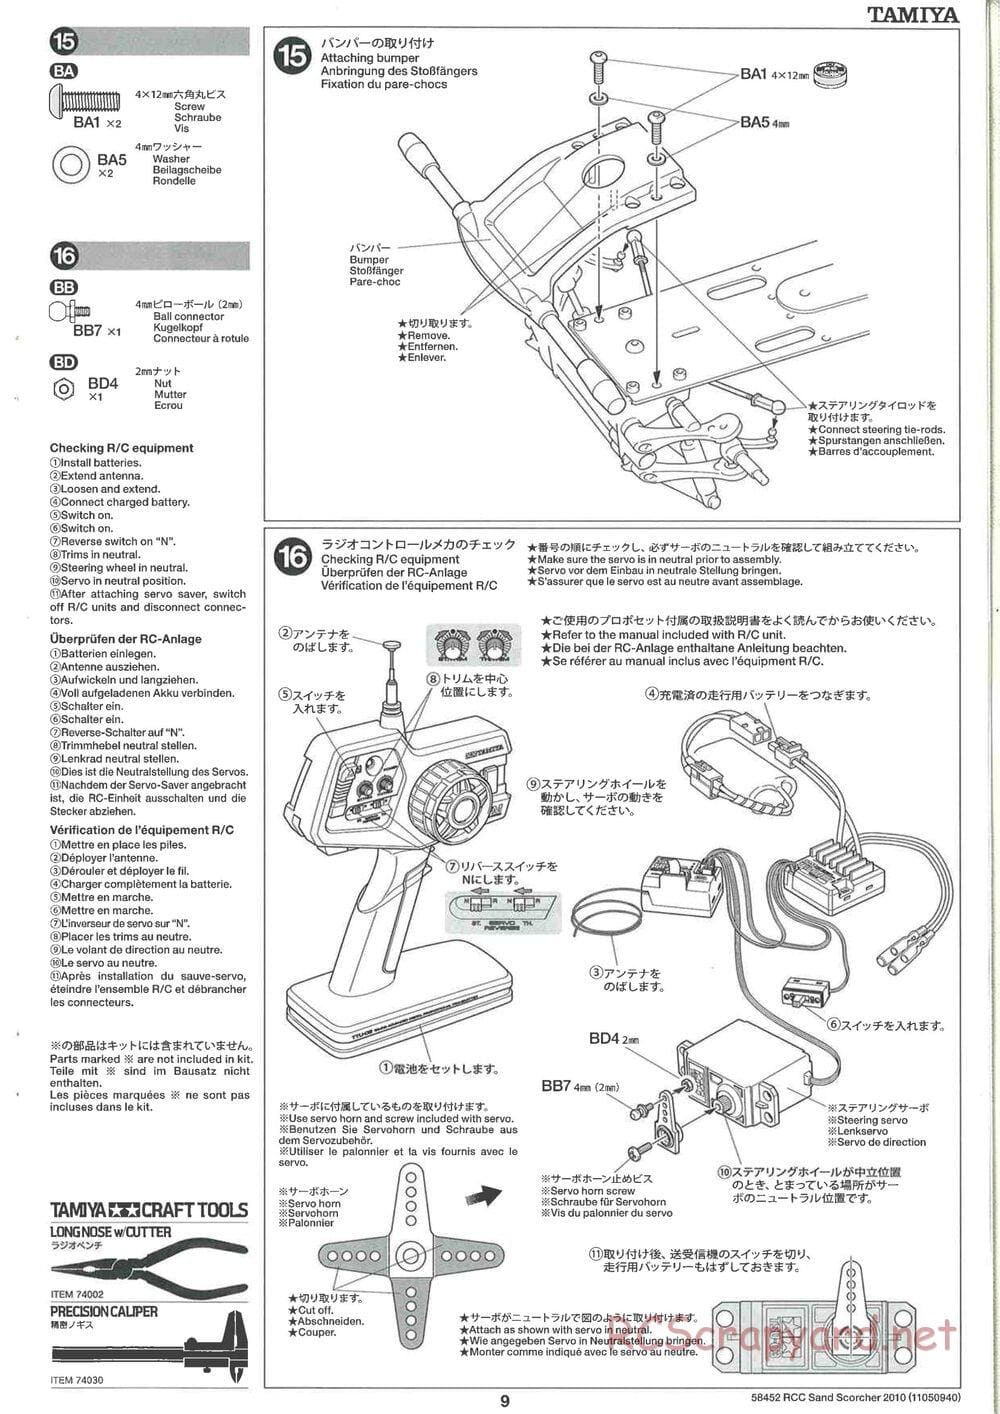 Tamiya - Sand Scorcher 2010 - SRB v1 Chassis - Manual - Page 9